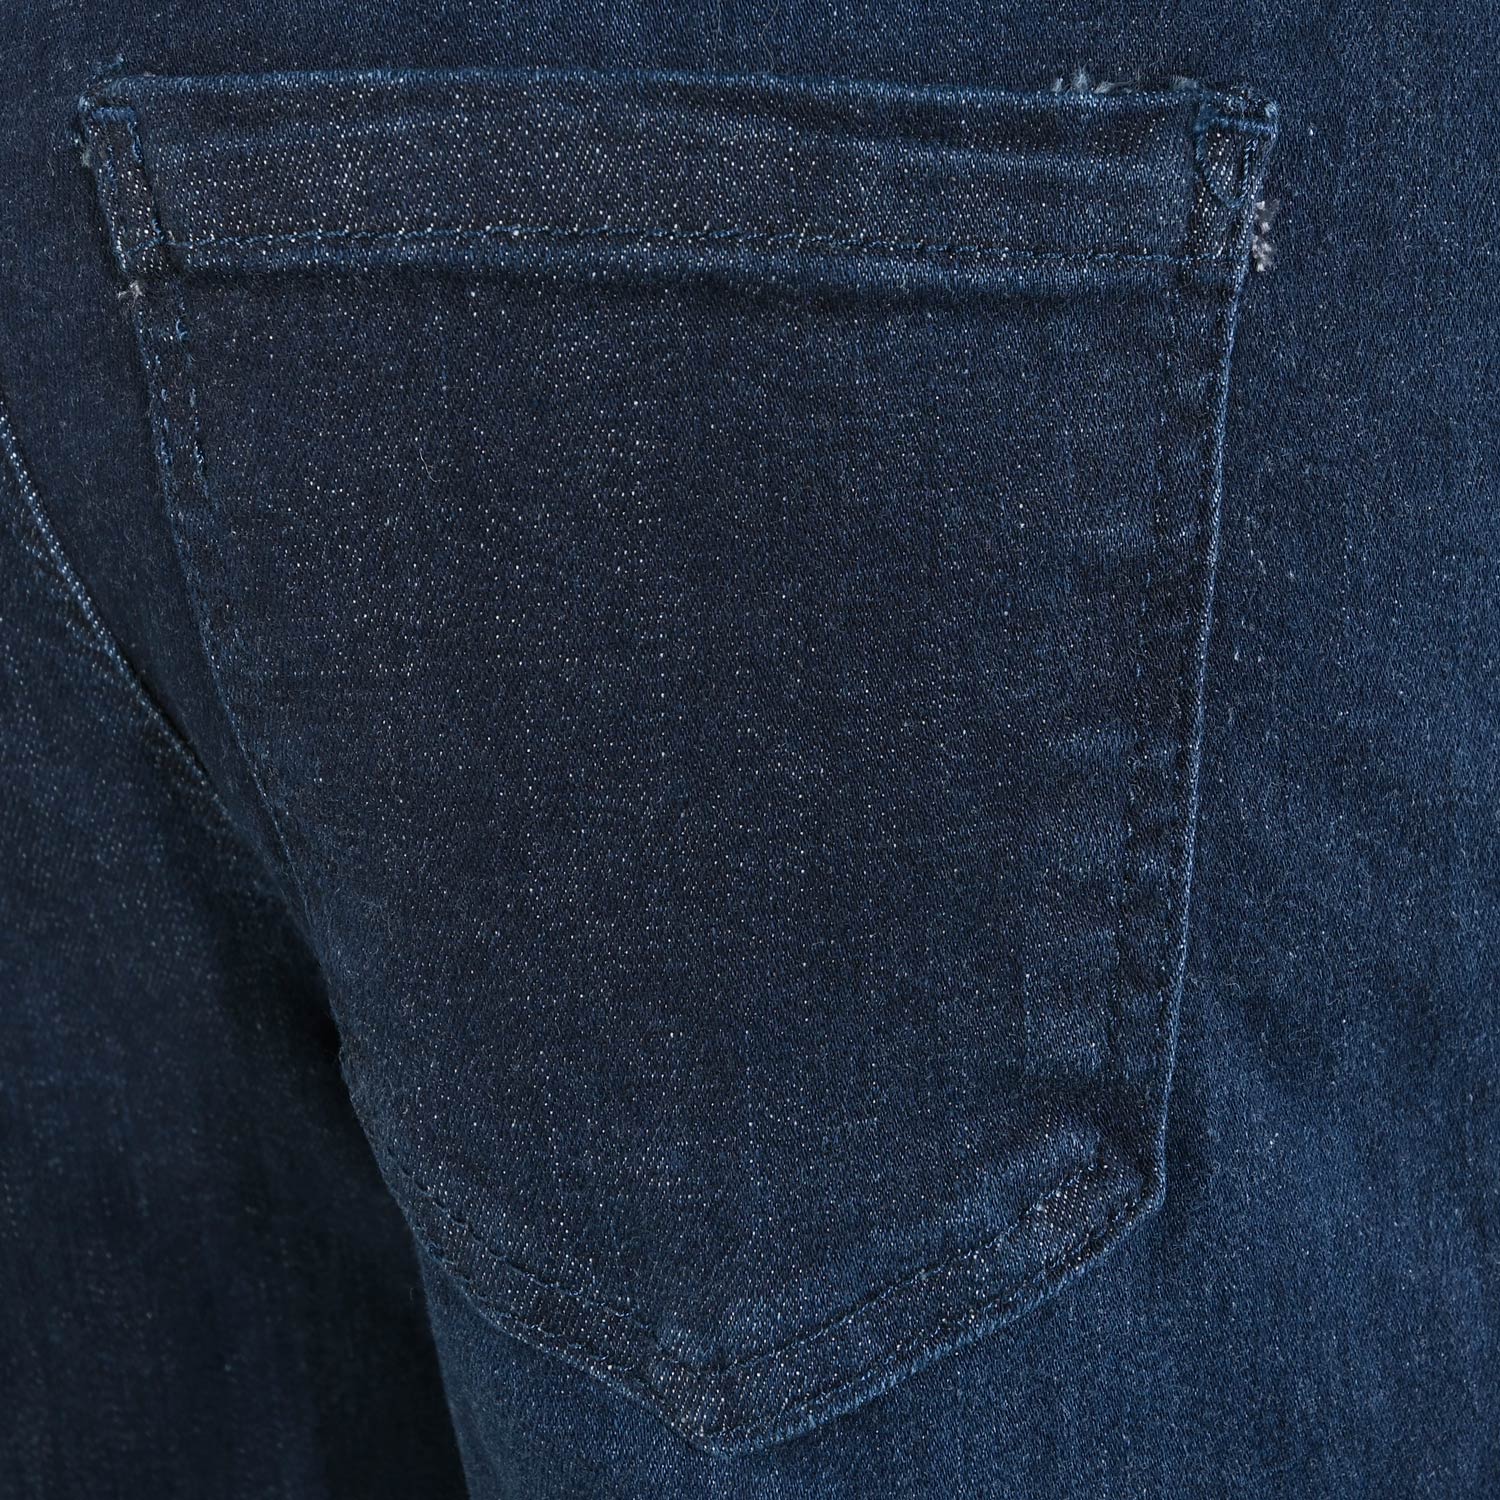 1401-JRNY Wide Leg Jeans Girls, Straight Cut, verfügbar in Normal